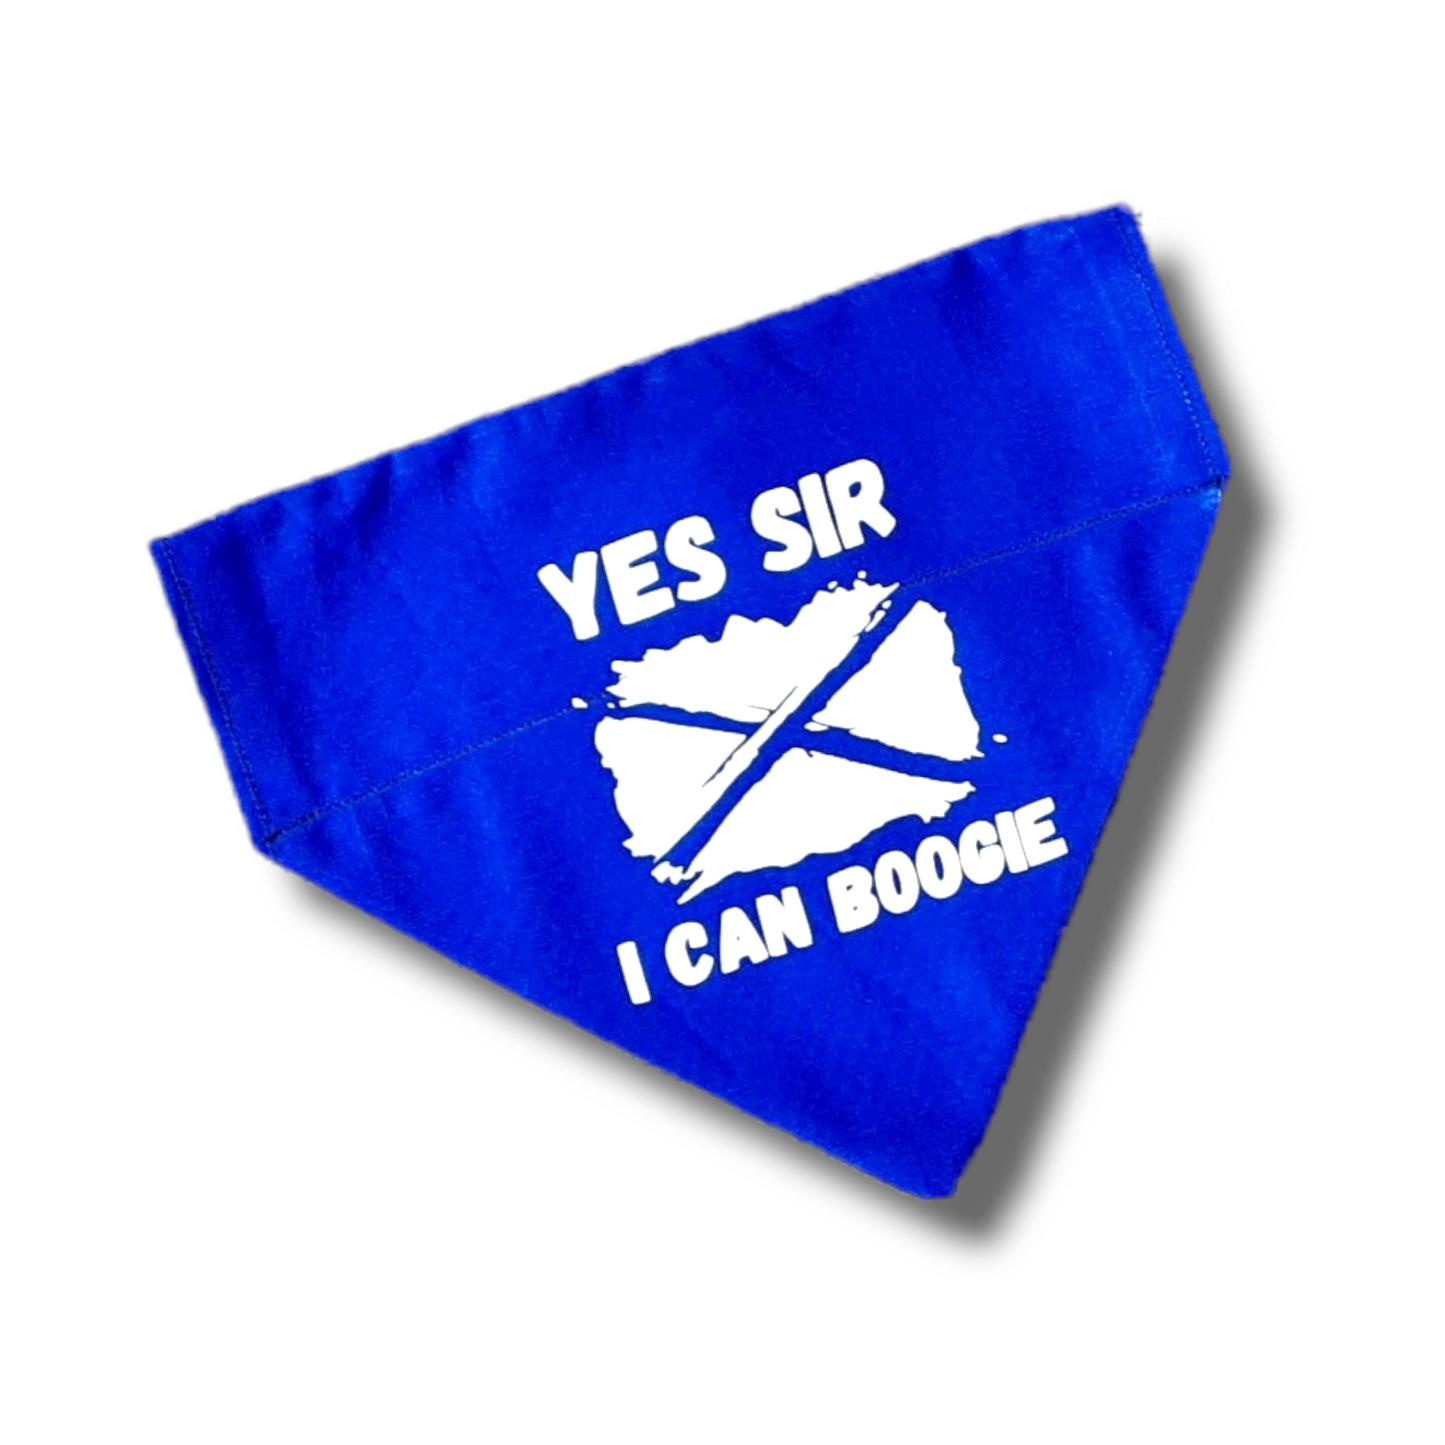 ‘Yes sir I can boogie’ dog bandana